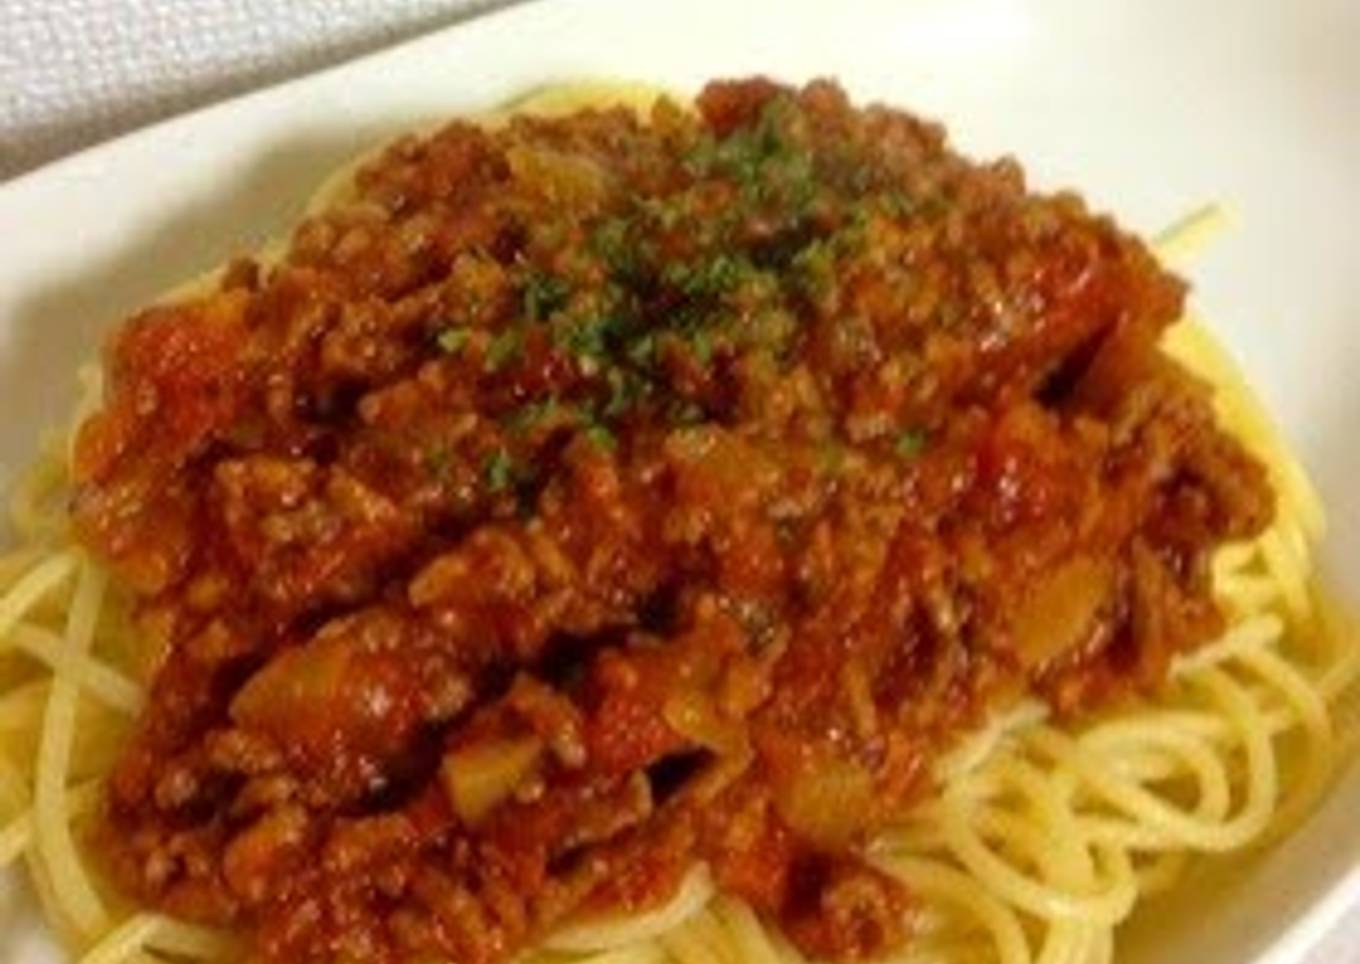 Light և և delicious pasta with meat sauce